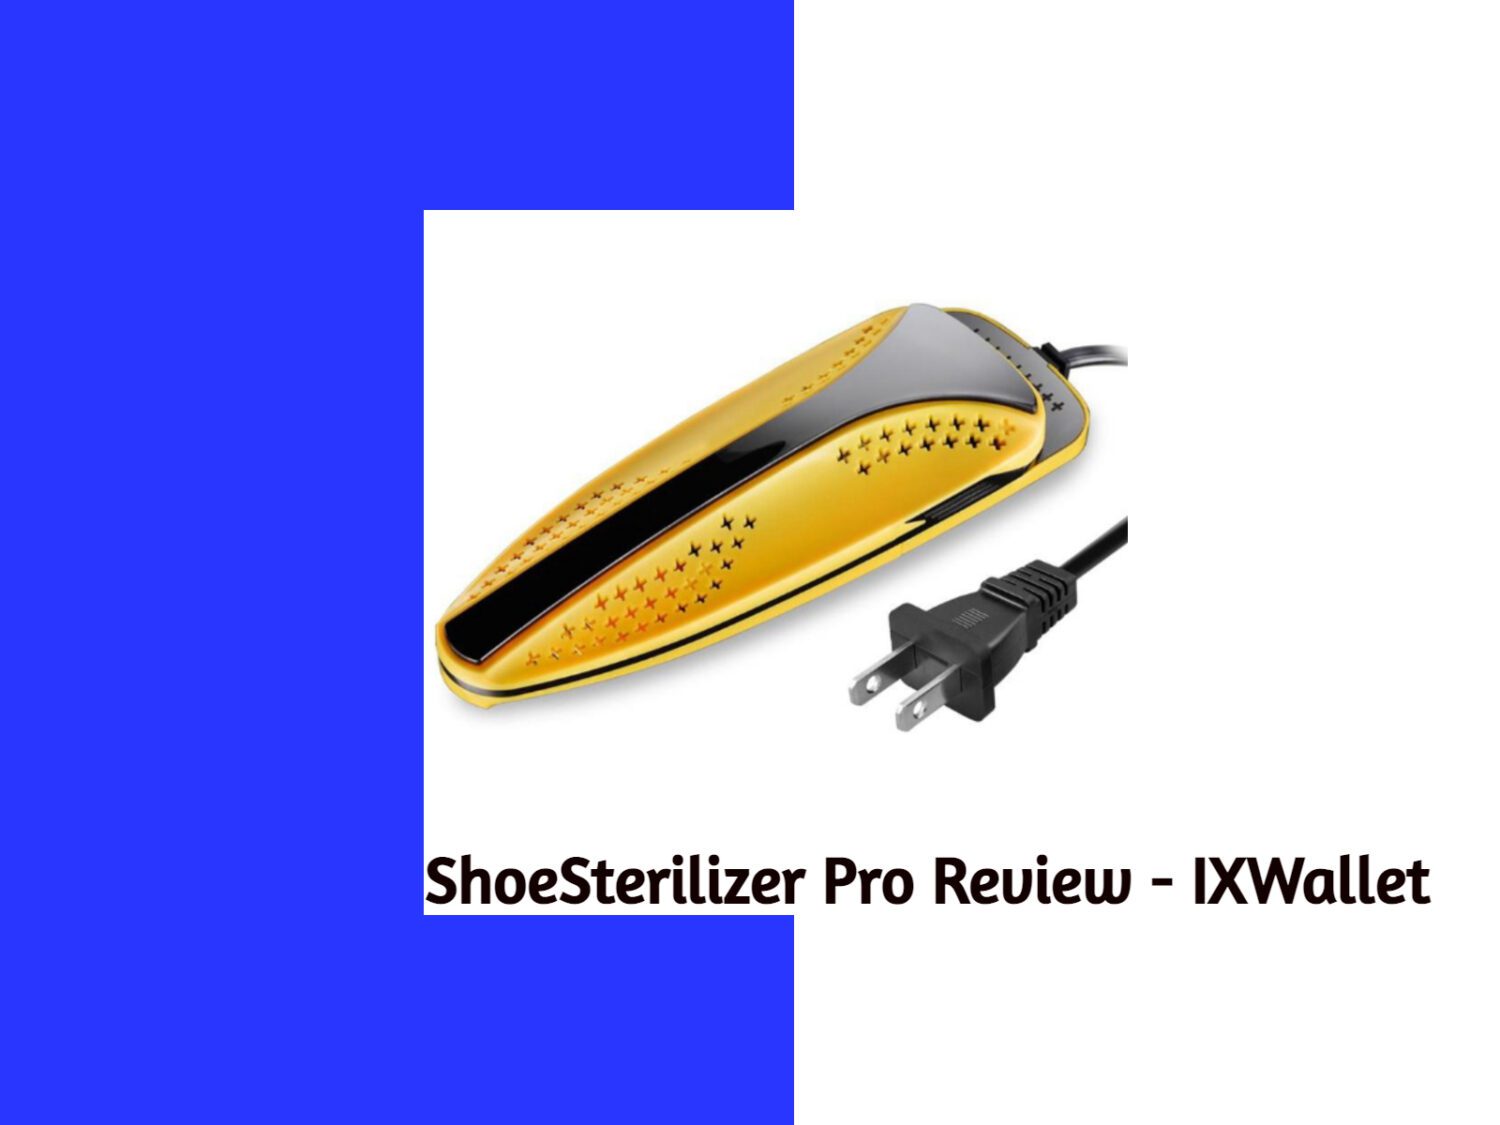 An image having ShoeSanitizer Pro Review written